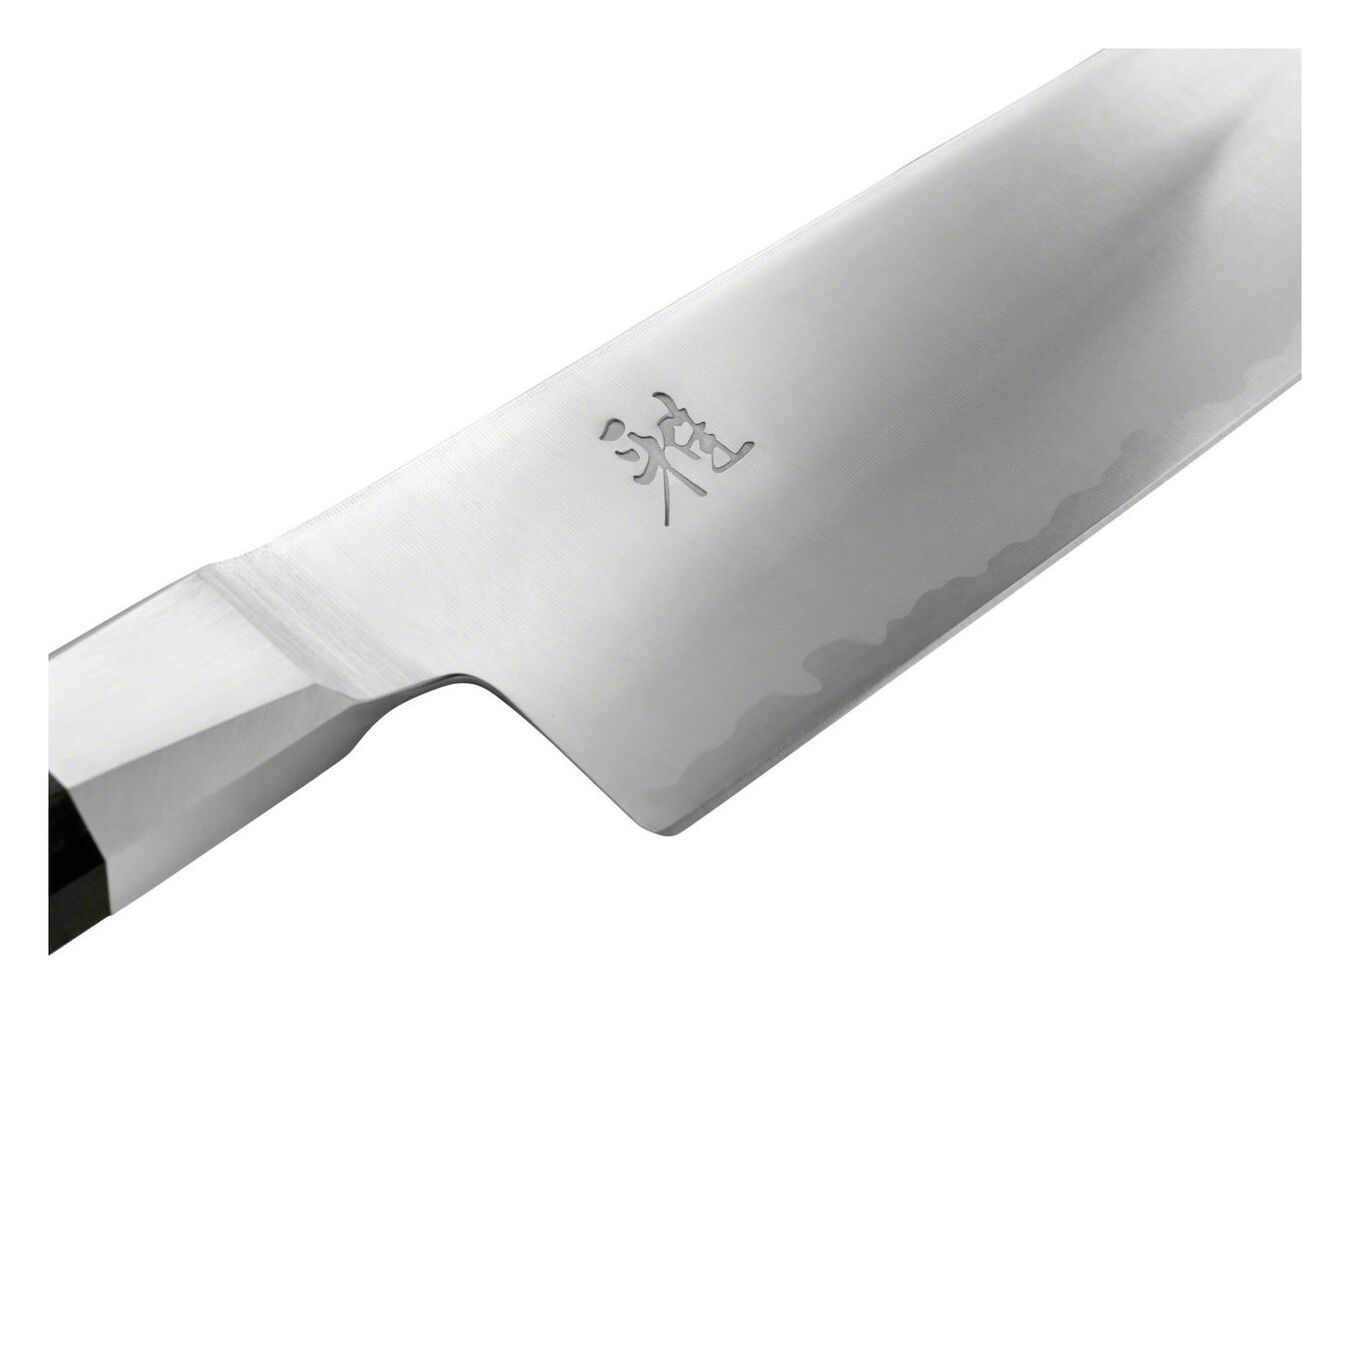 5.5-inch Pakka Wood Prep Knife,,large 3